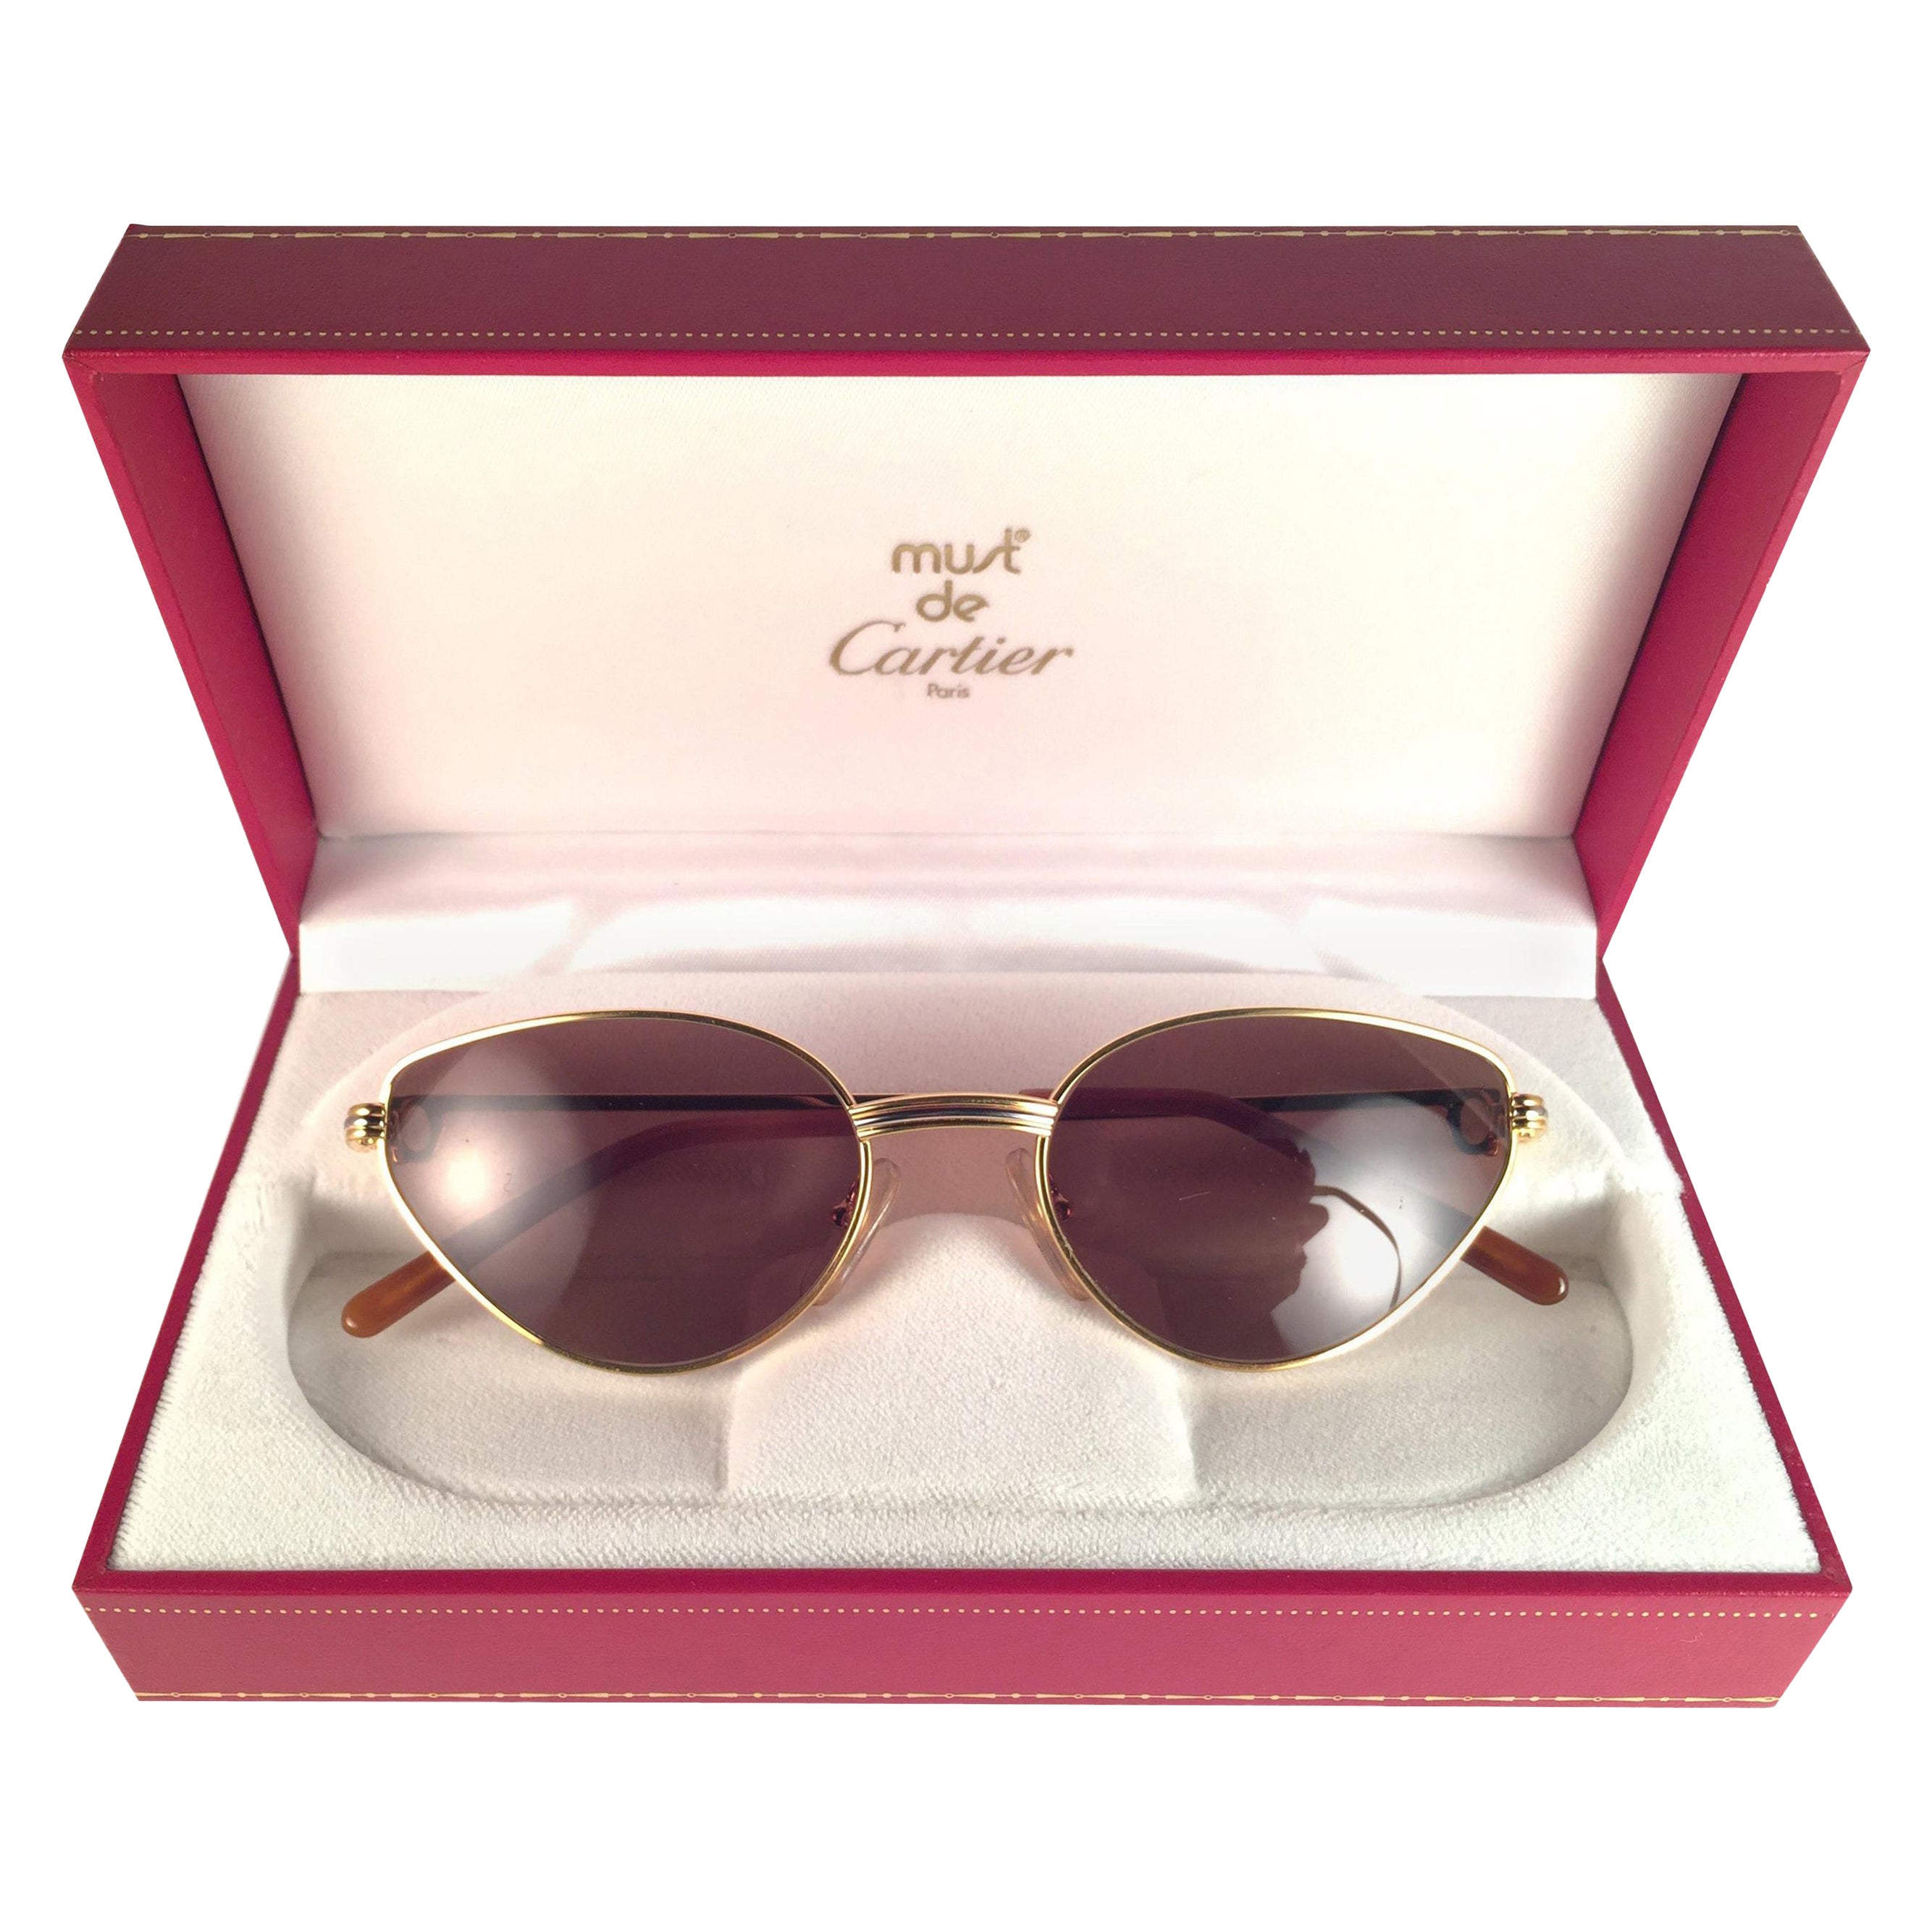 Neu Cartier Rivoli Vendome 56mm Katzenauge-Sonnenbrille 18k schwer versilbert Frankreich im Angebot